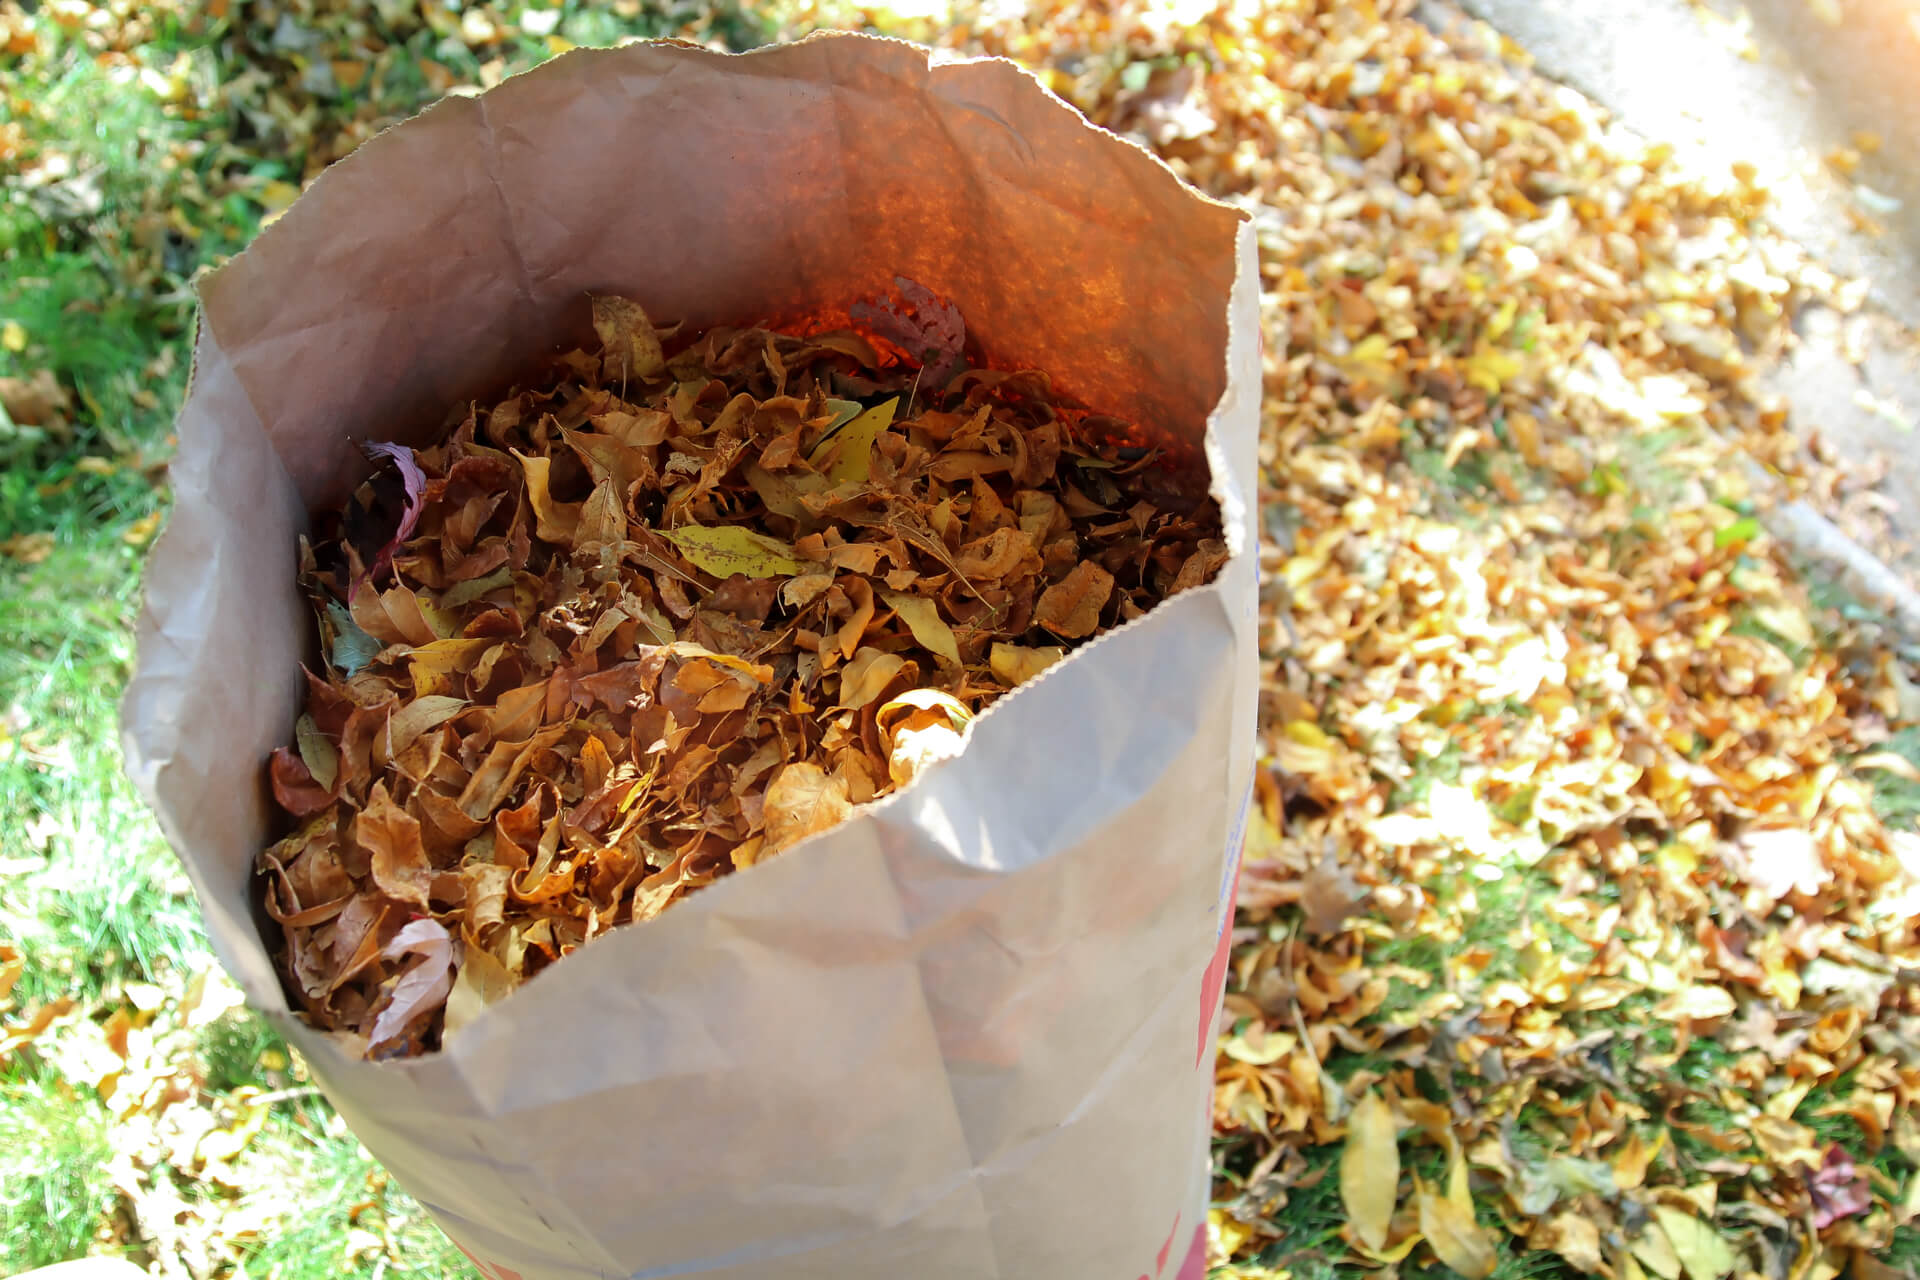 Leaf Bags Lawn Garden waste Bag Yard Leaves Trash Garbage Bag